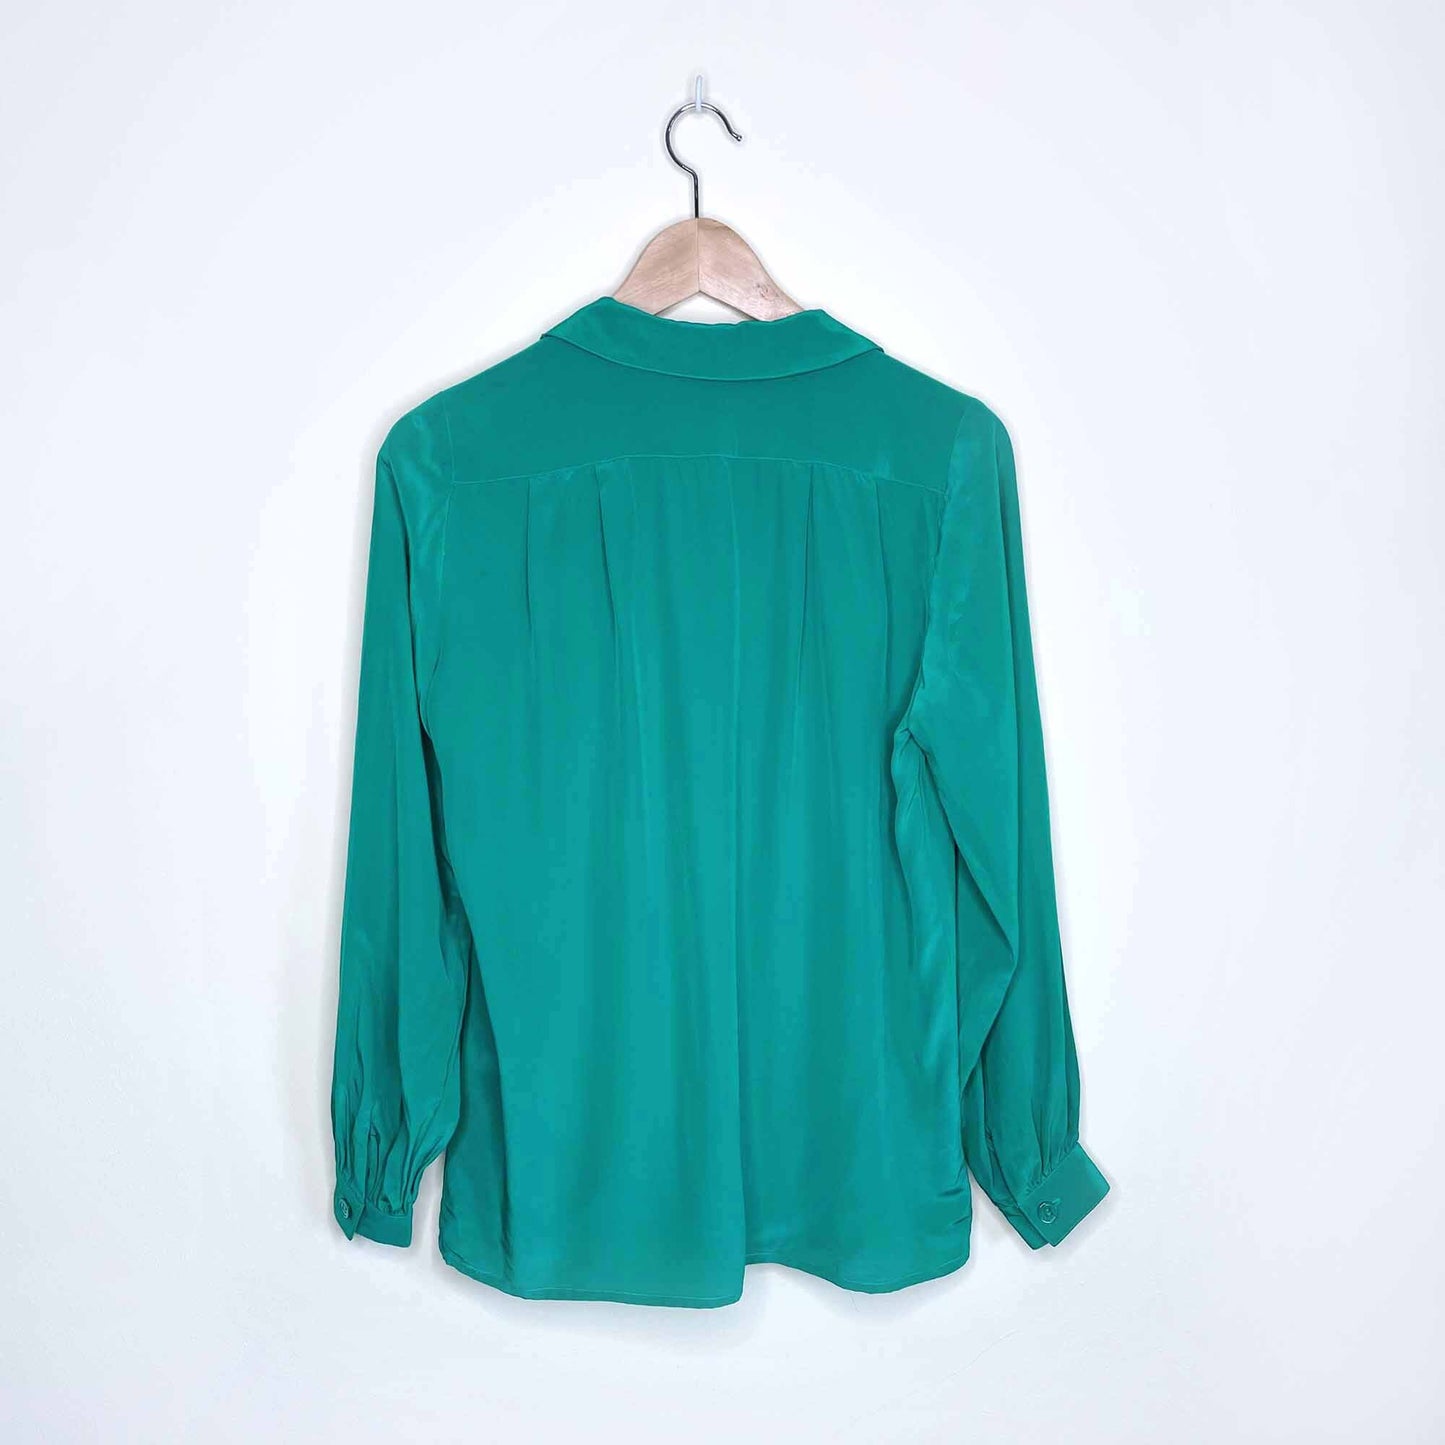 Vintage emerald green 100% silk blouse - size Medium